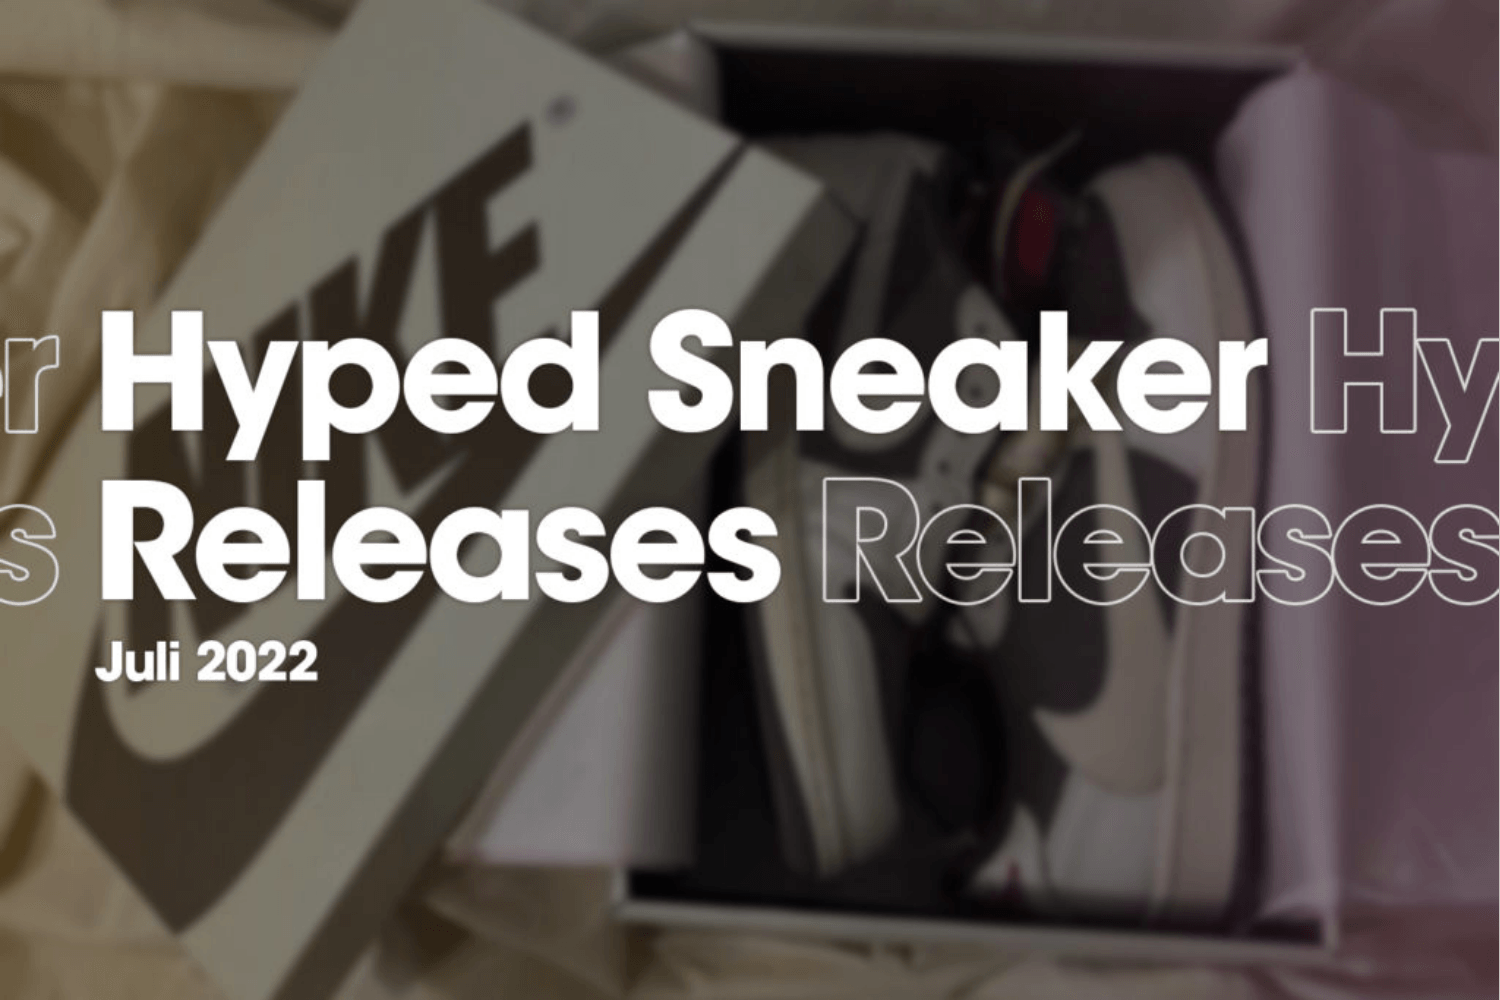 Die Hyped Sneaker Releases von Juni 2022 im Überblick